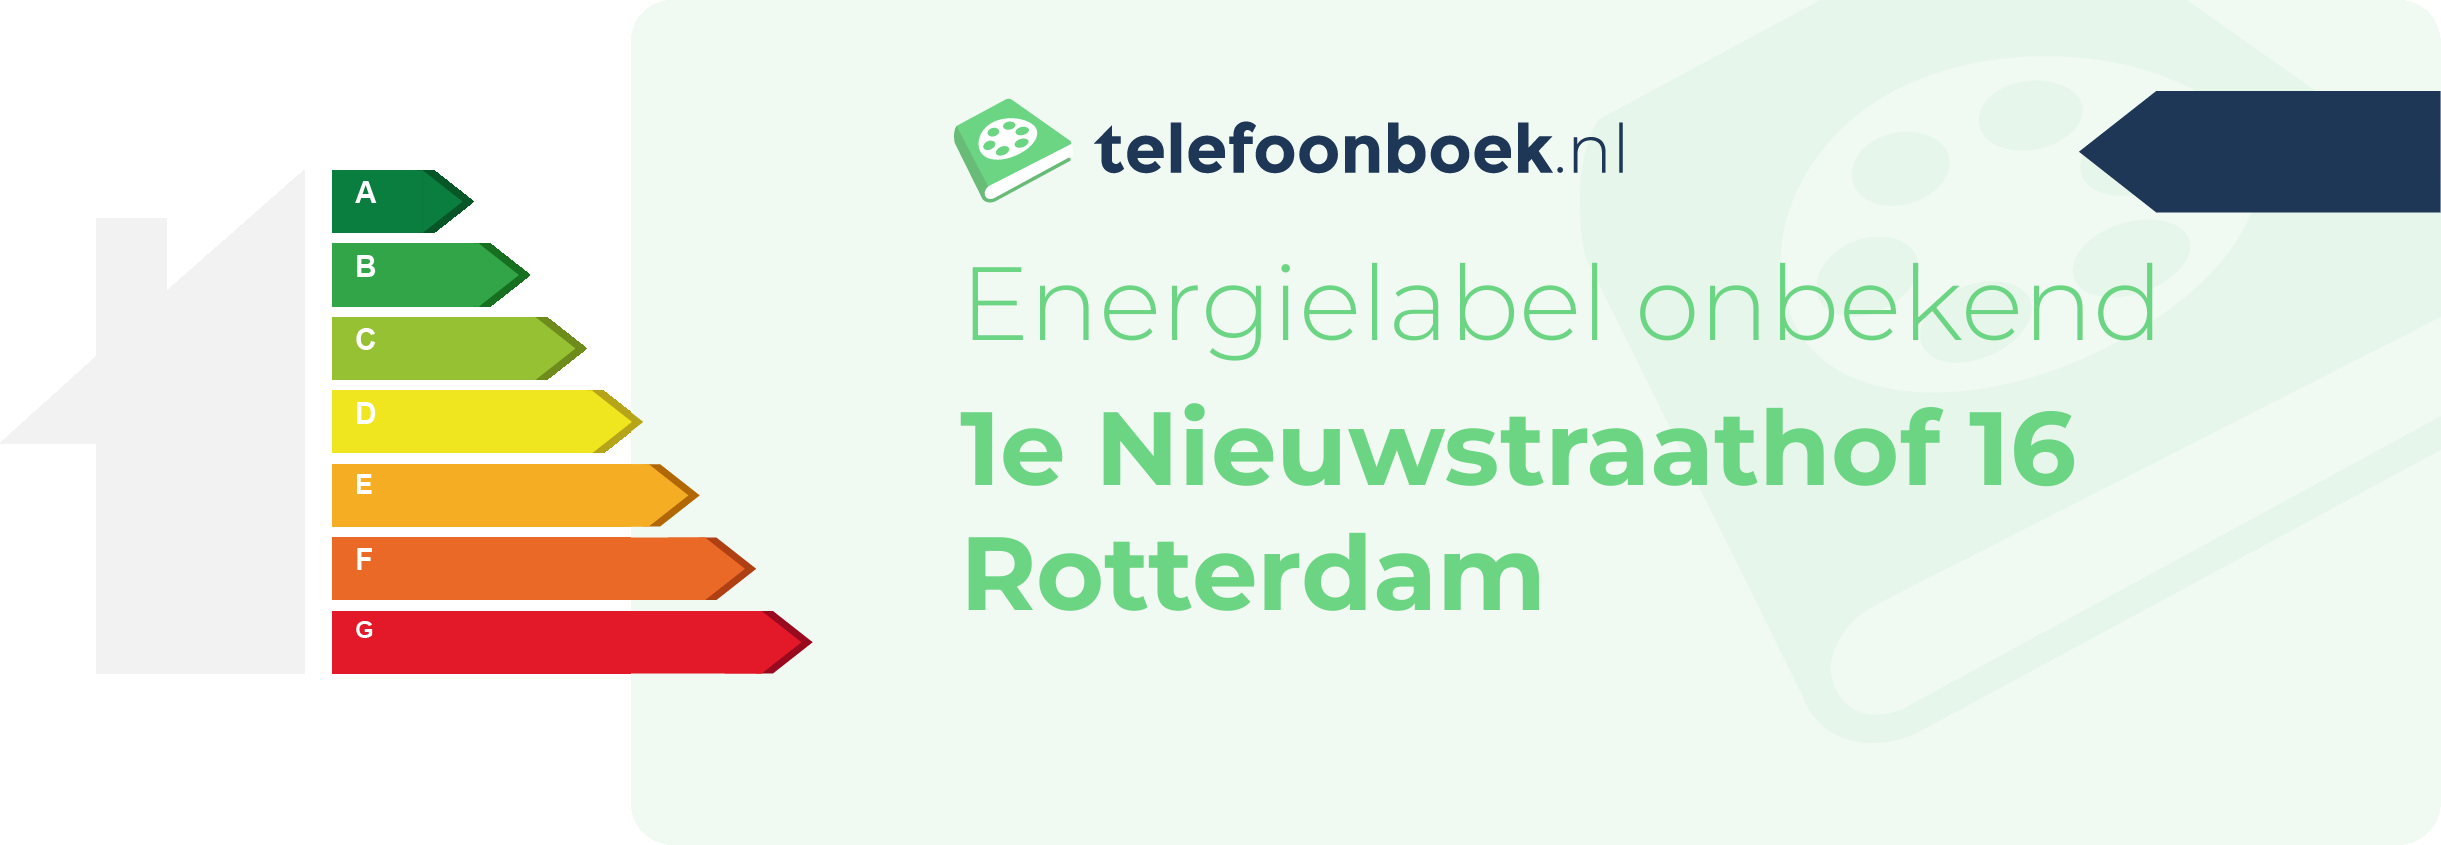 Energielabel 1e Nieuwstraathof 16 Rotterdam